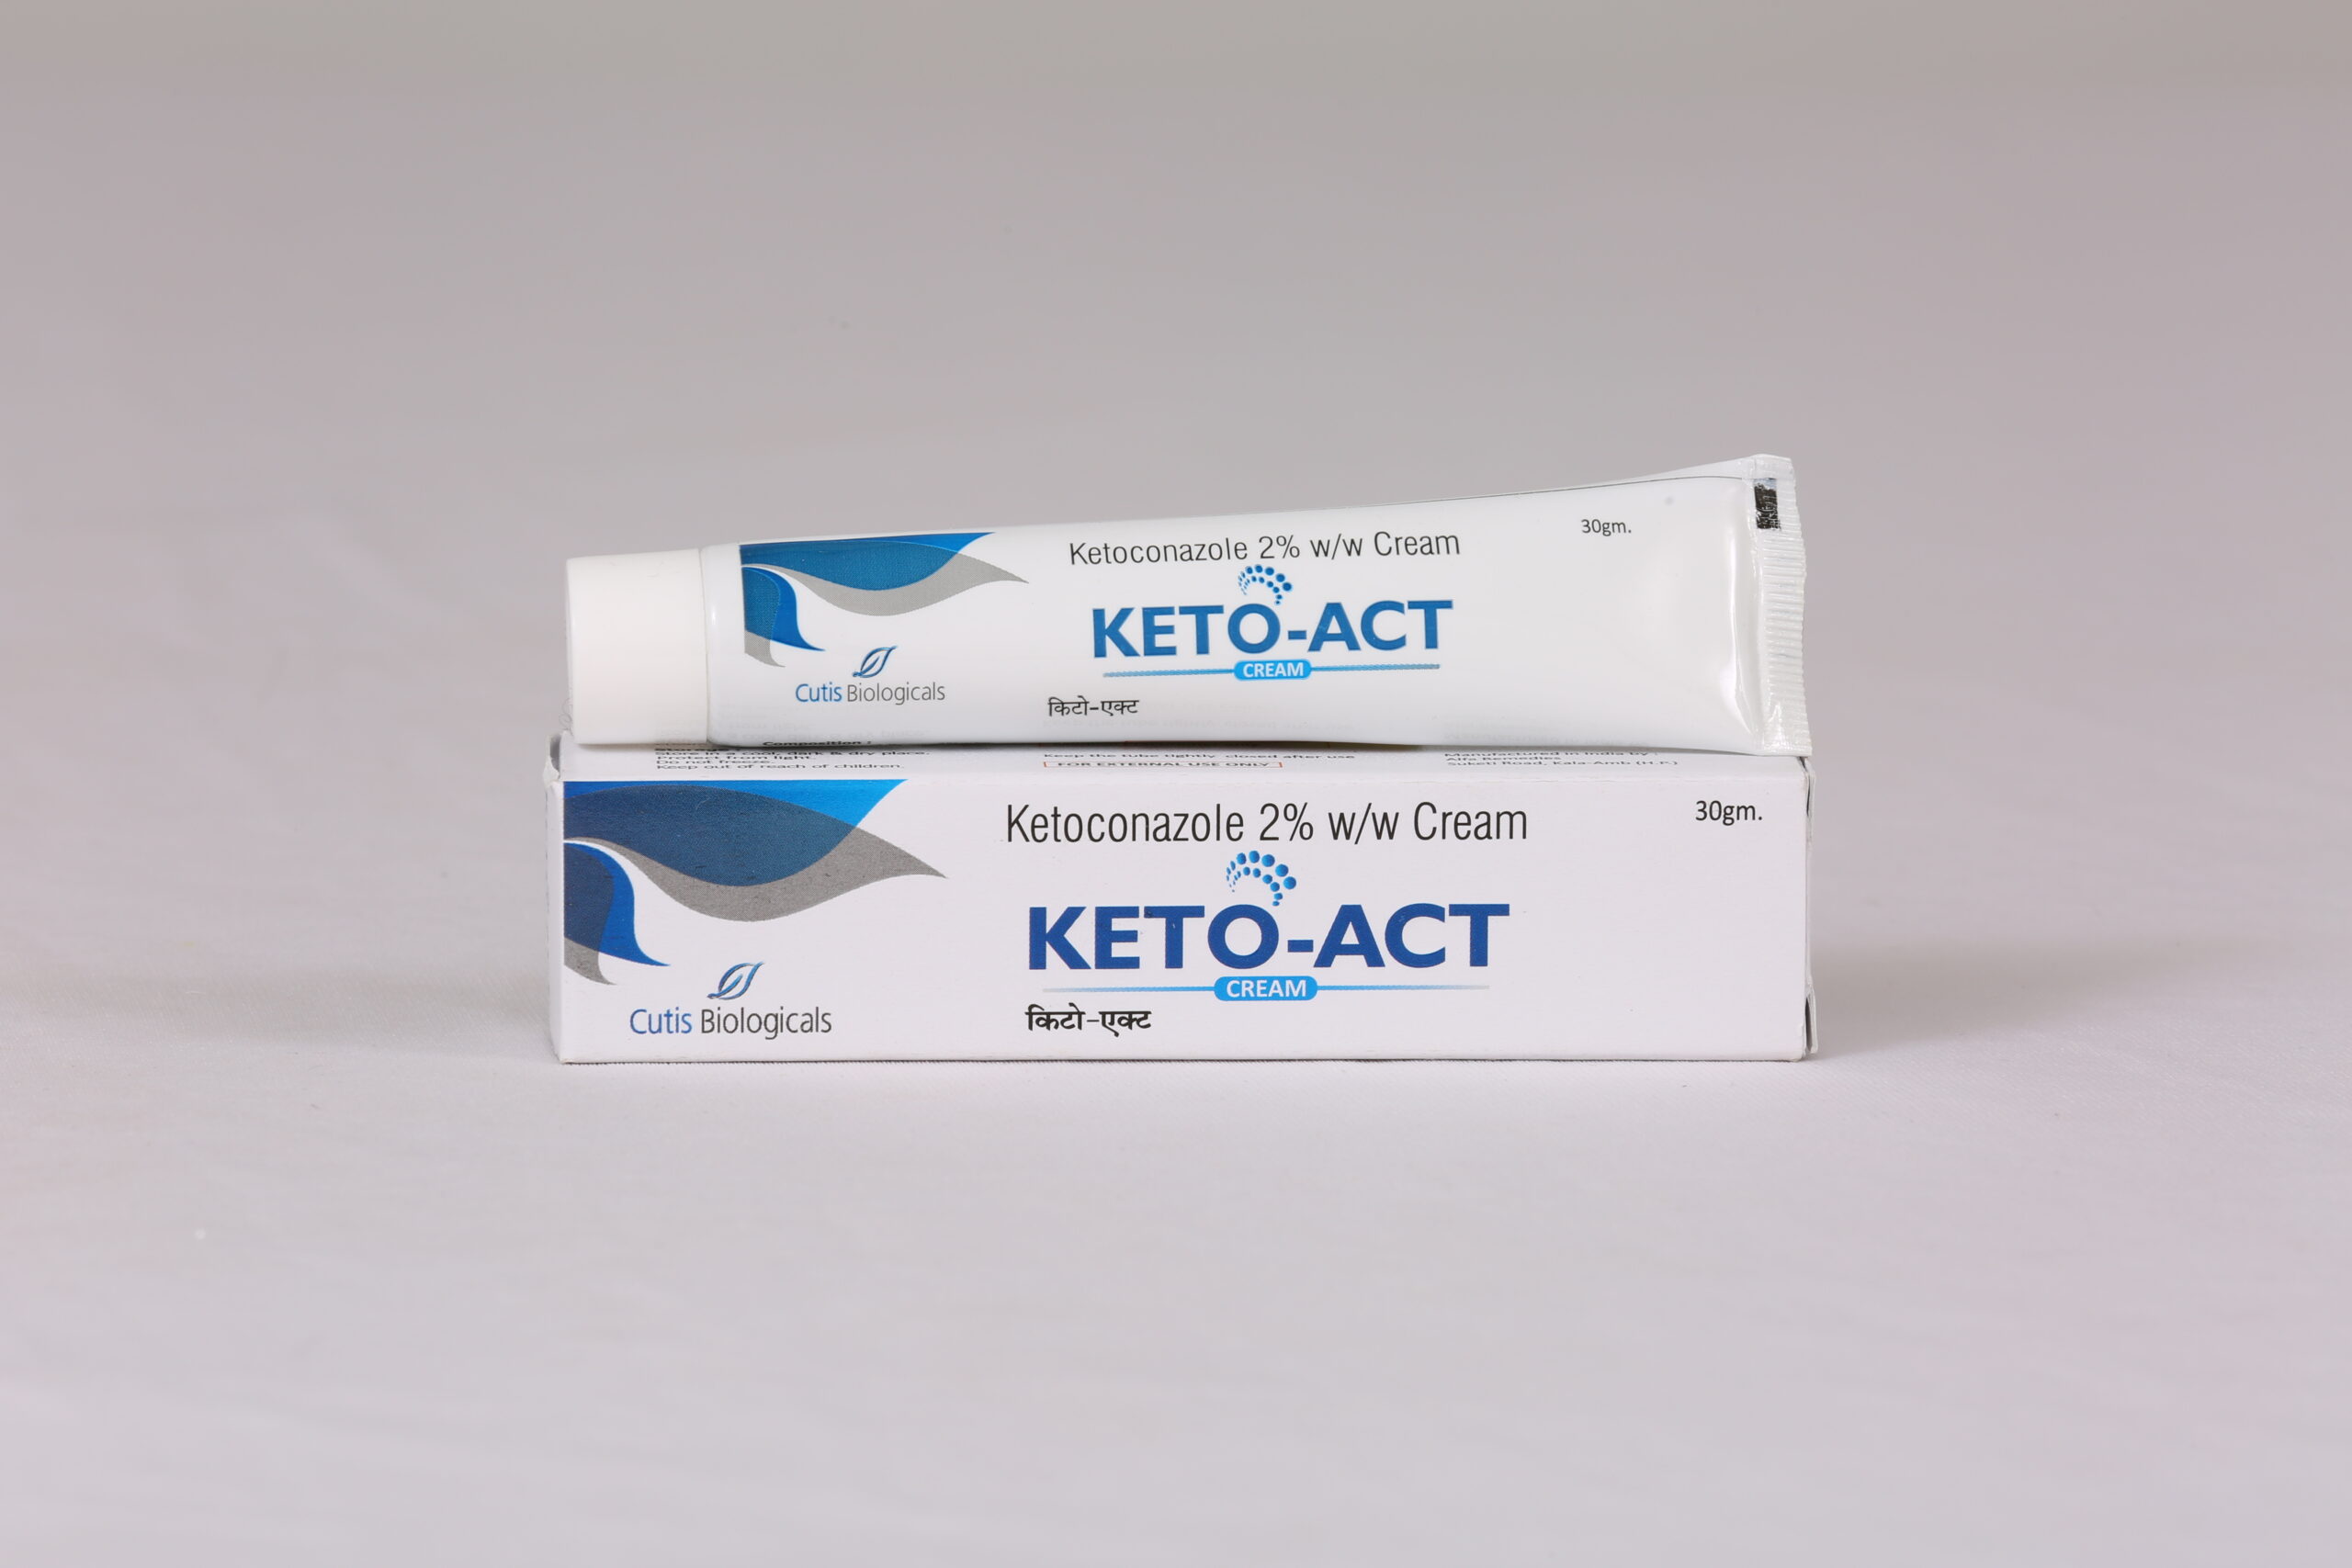 KETO-ACT-CREAM (Ketoconazole 2% w/w Cream)